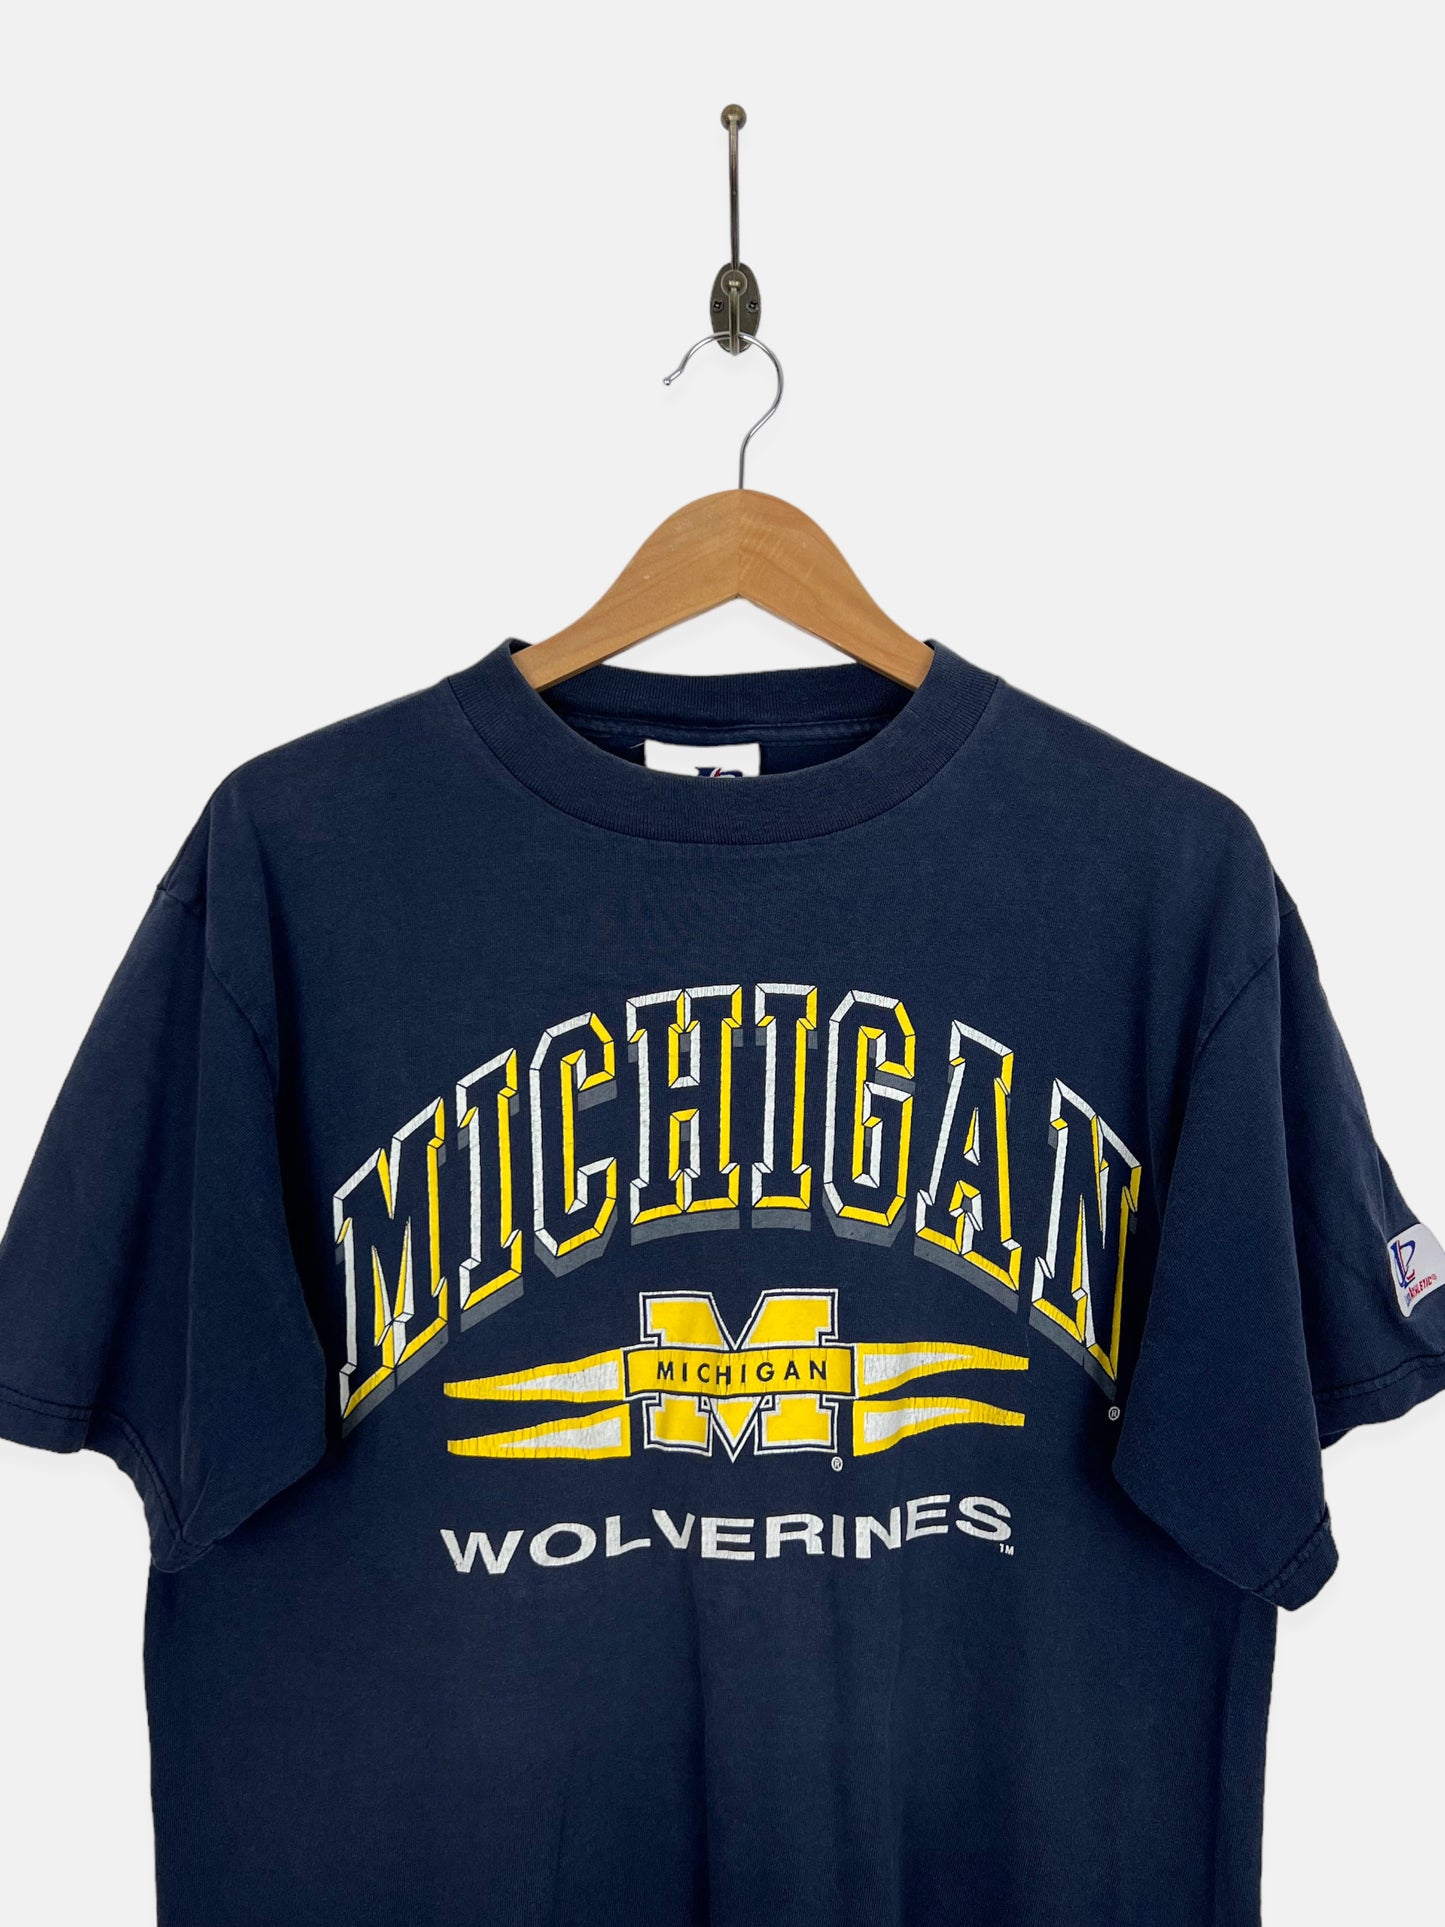 90's Michigan Wolverines Vintage T-Shirt Size S-M